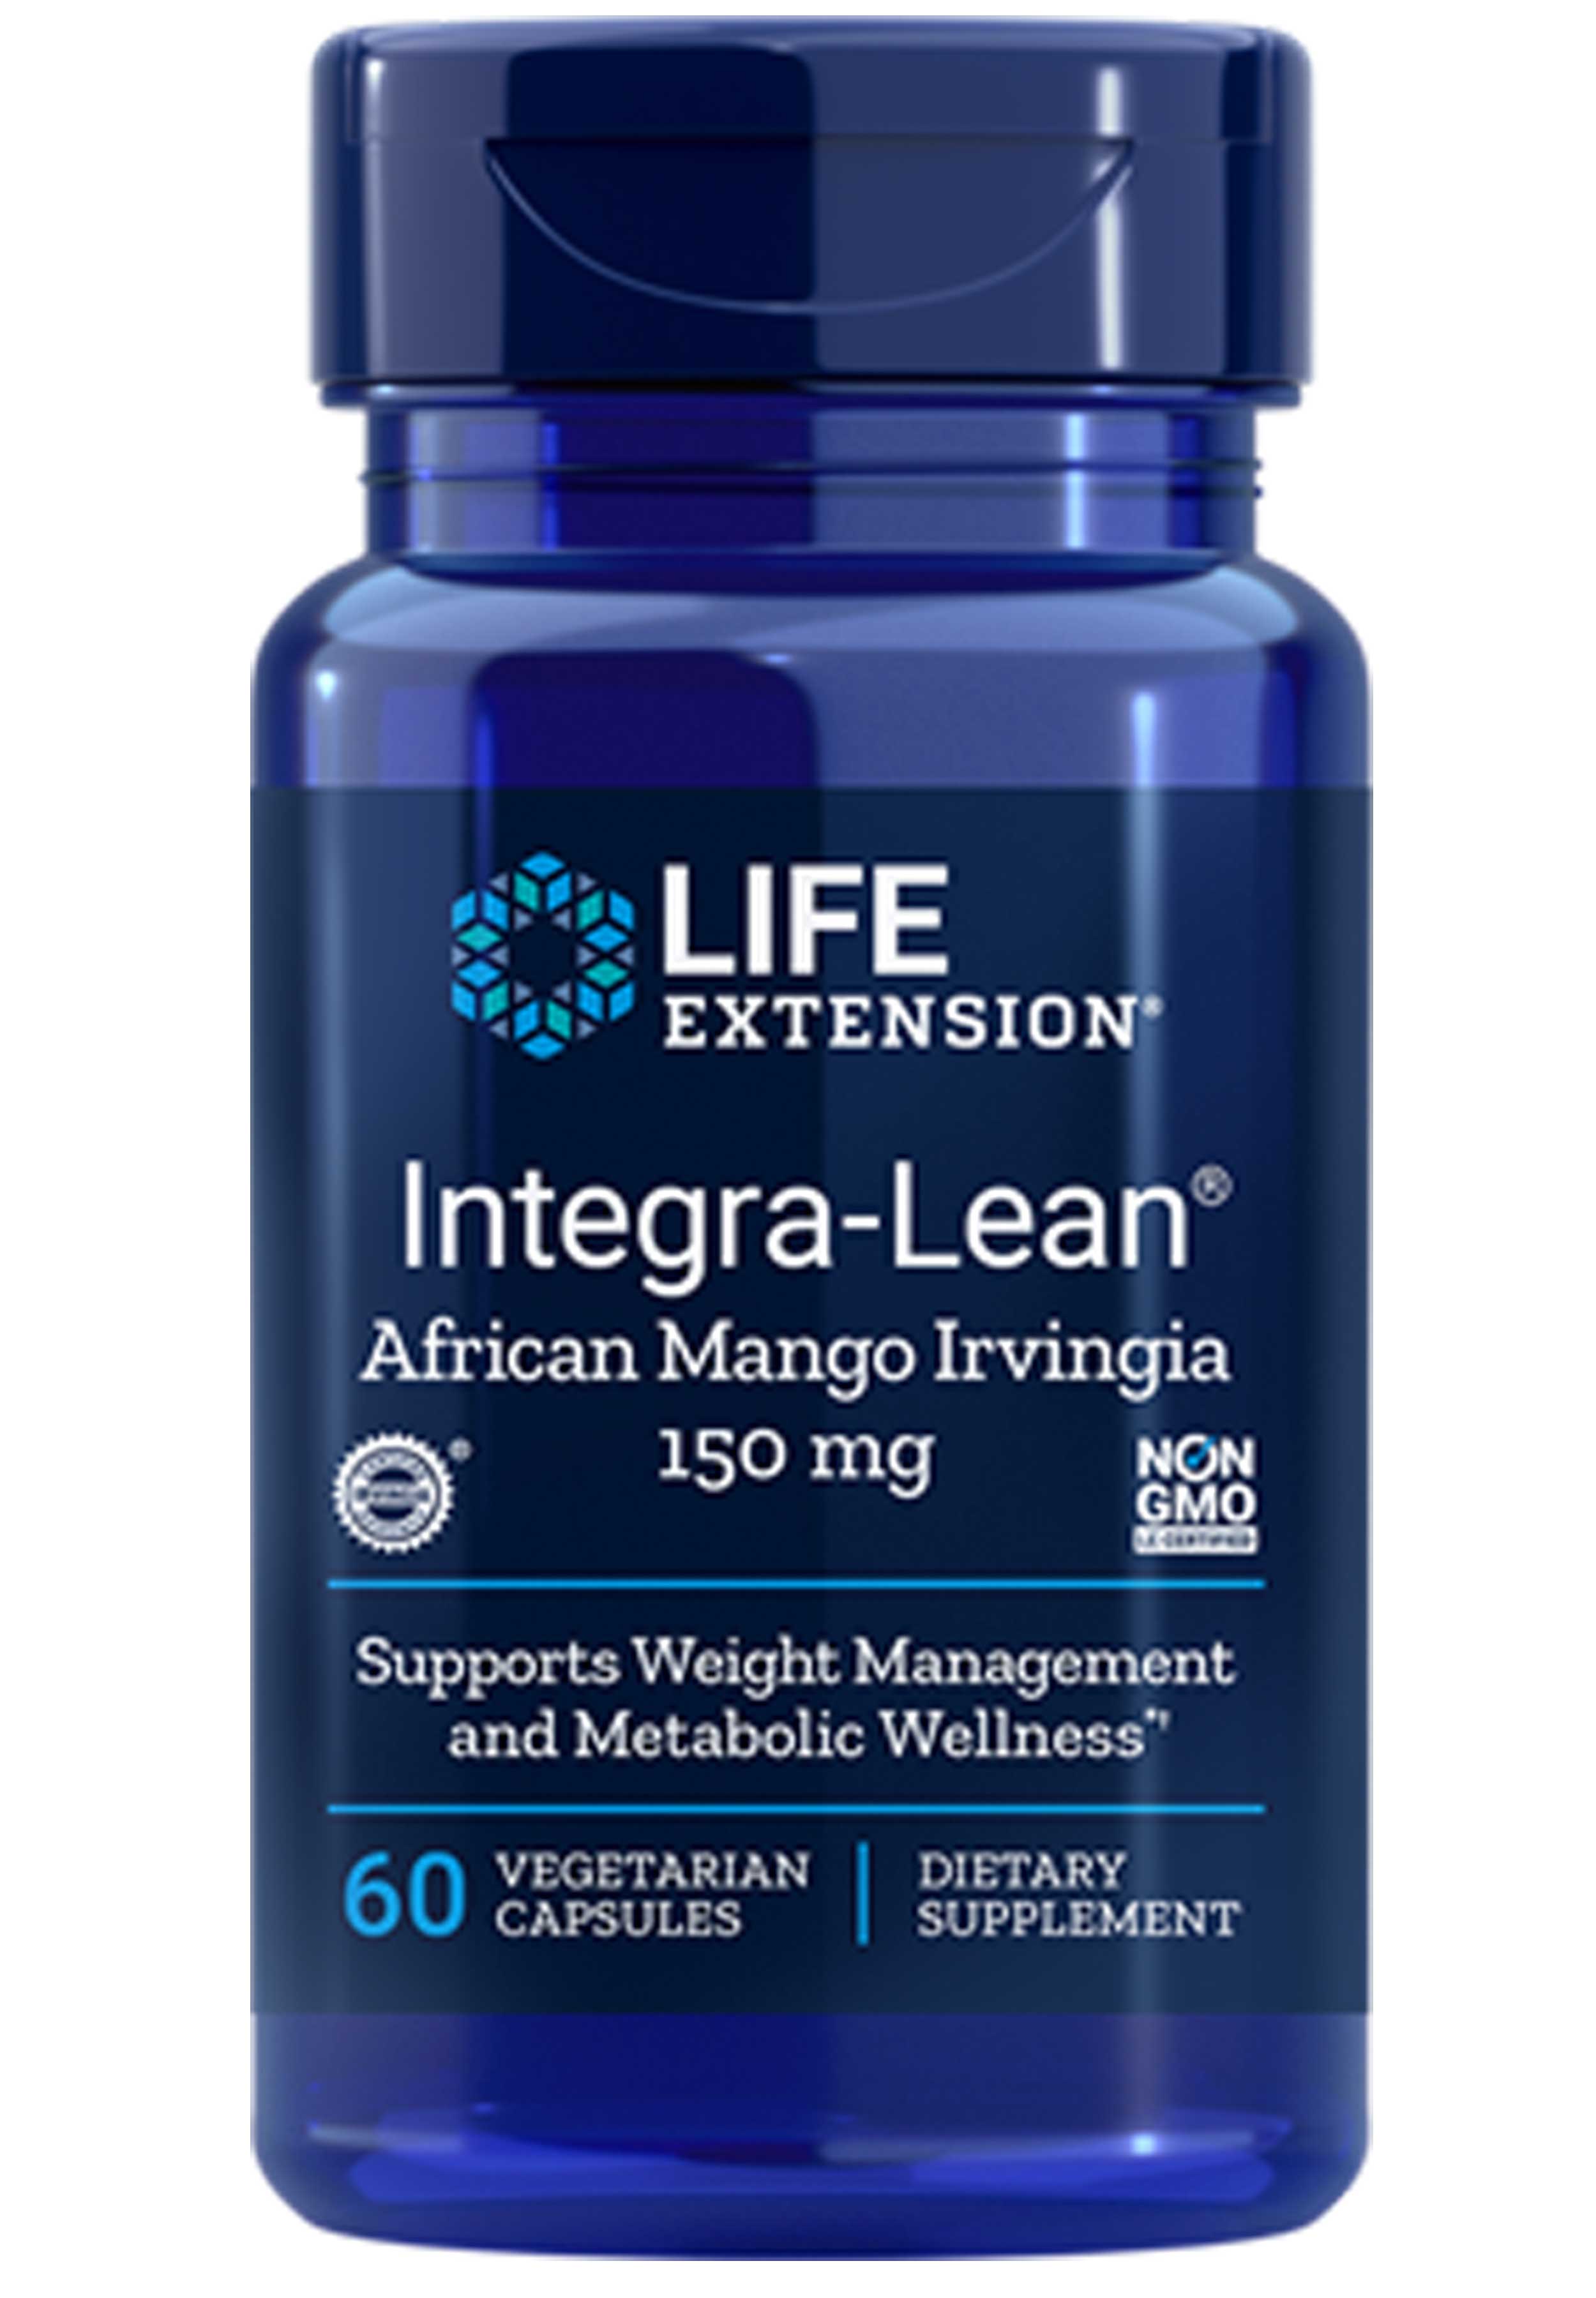 Life Extension Integra-Lean